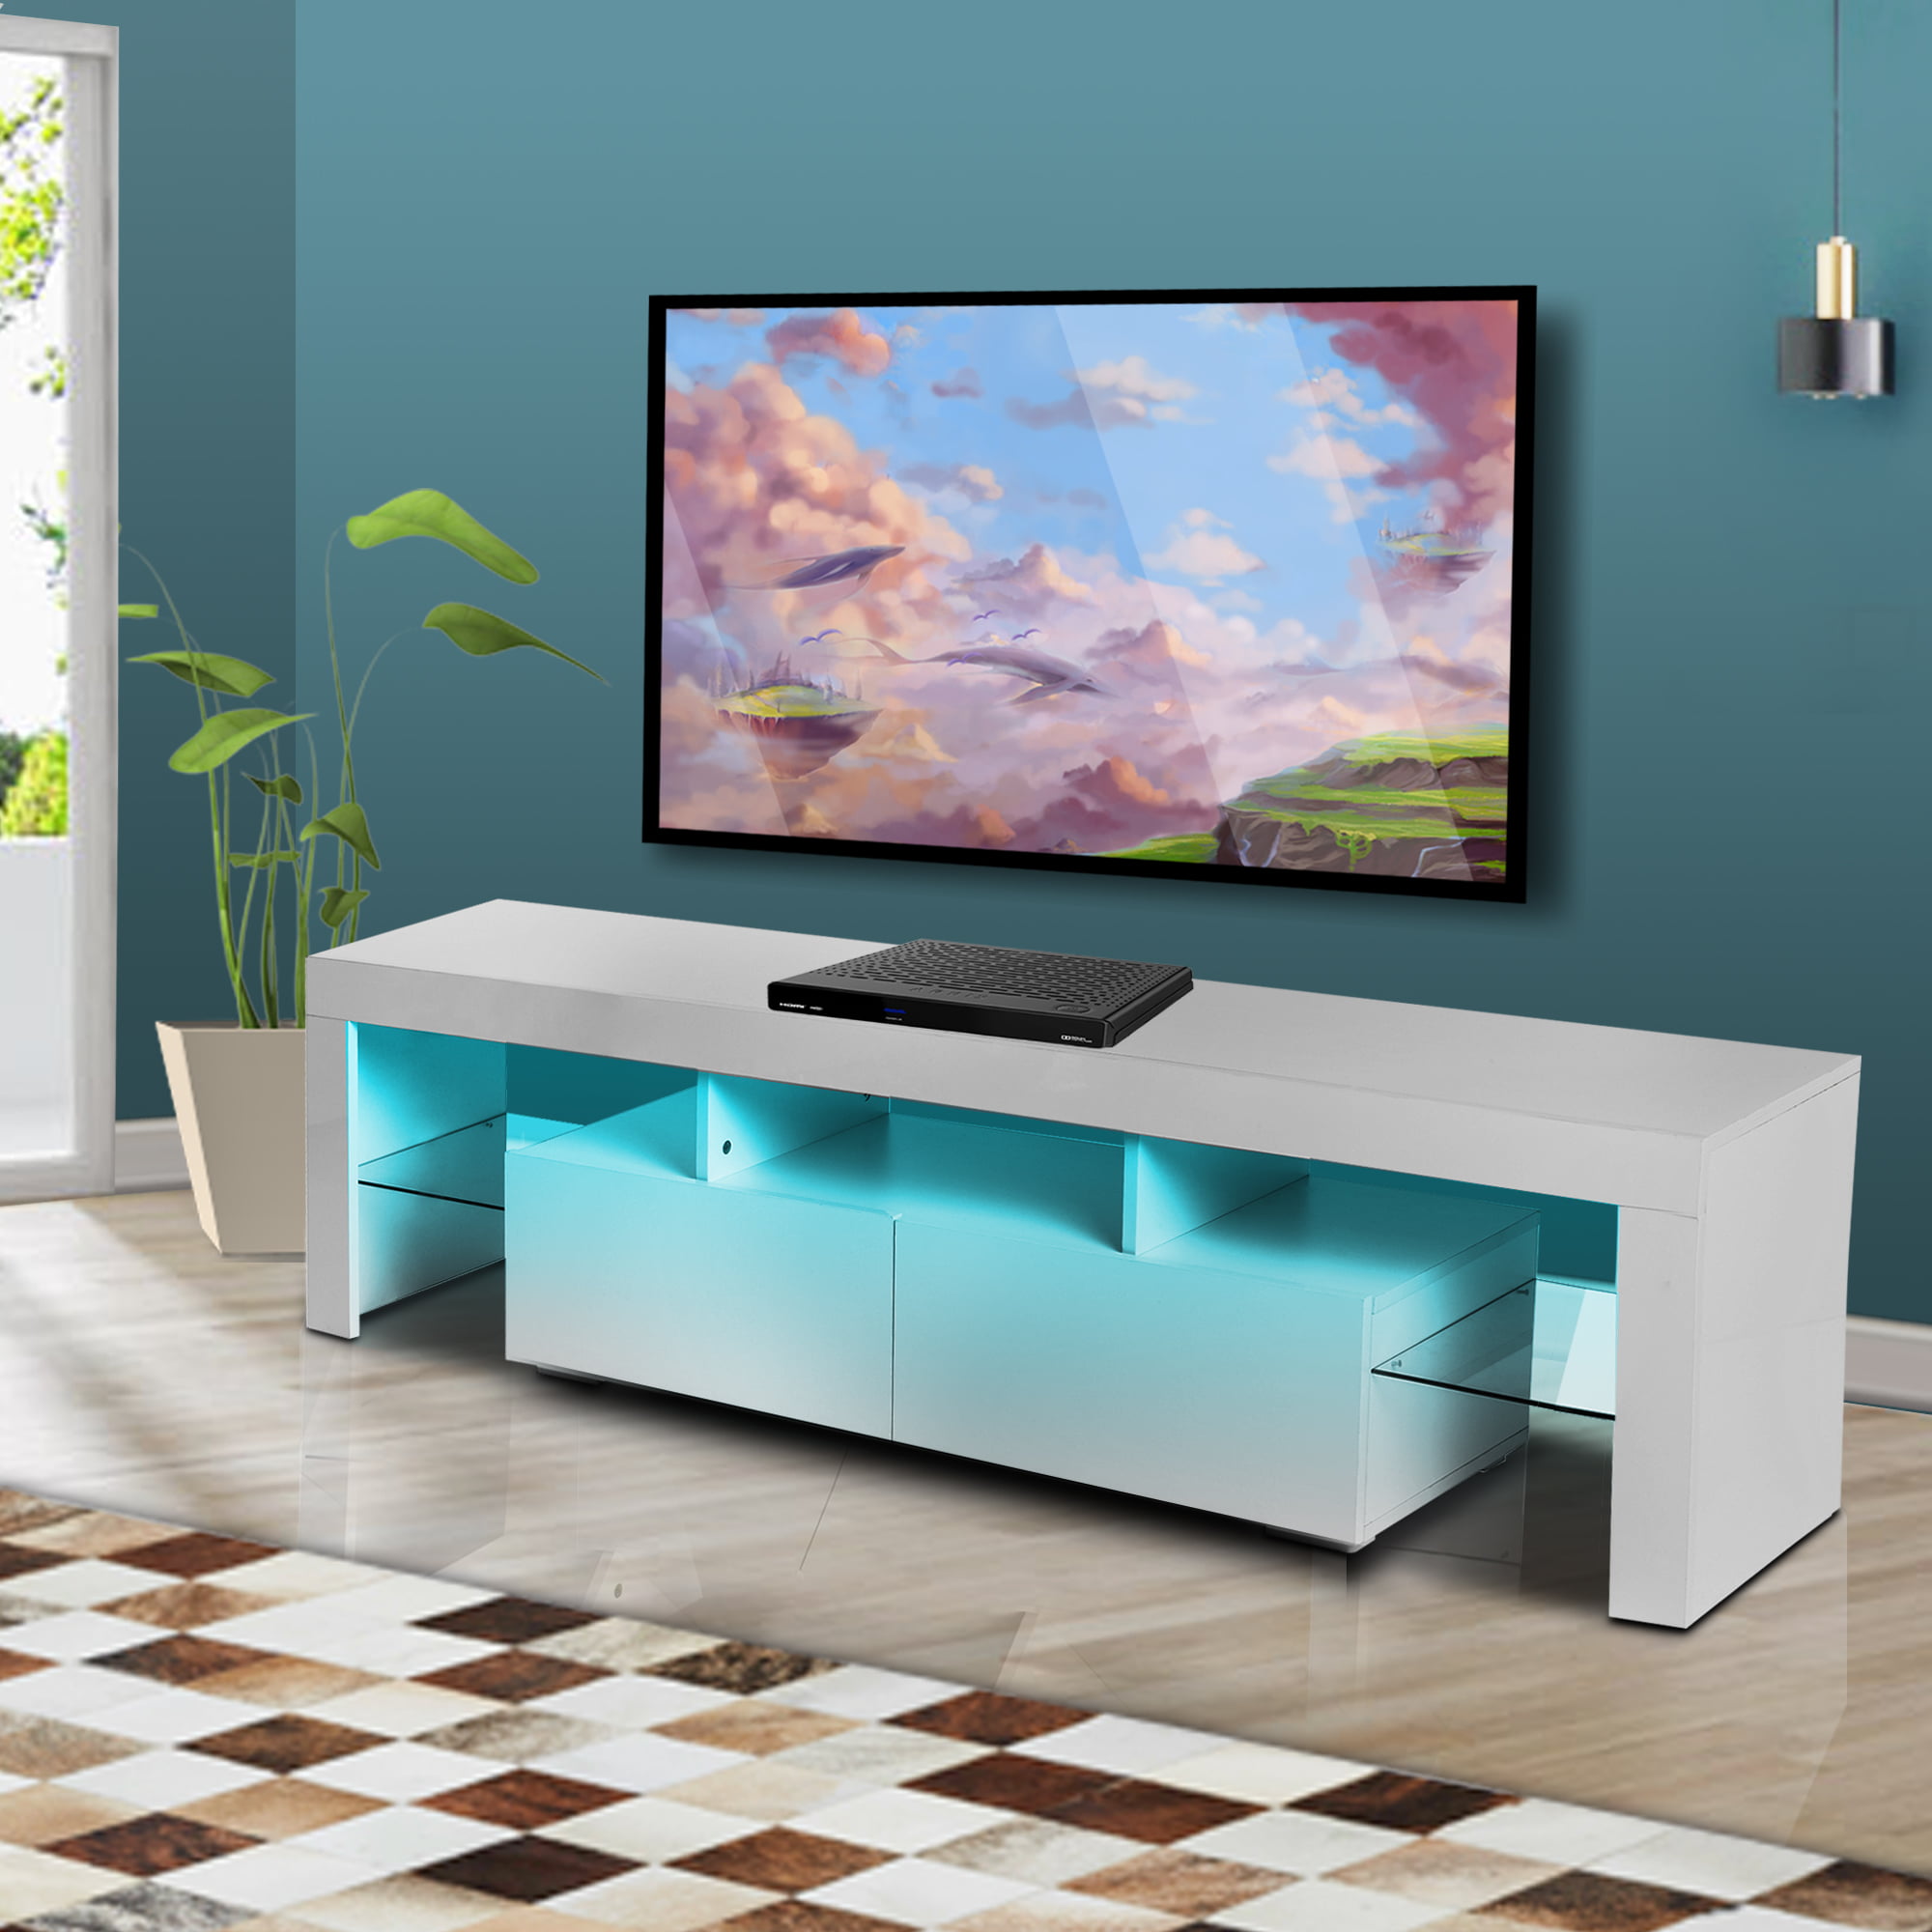 Details about   TV Stand Cabinet Unit Entertainment Center Shelves Home Furniture Console Table 